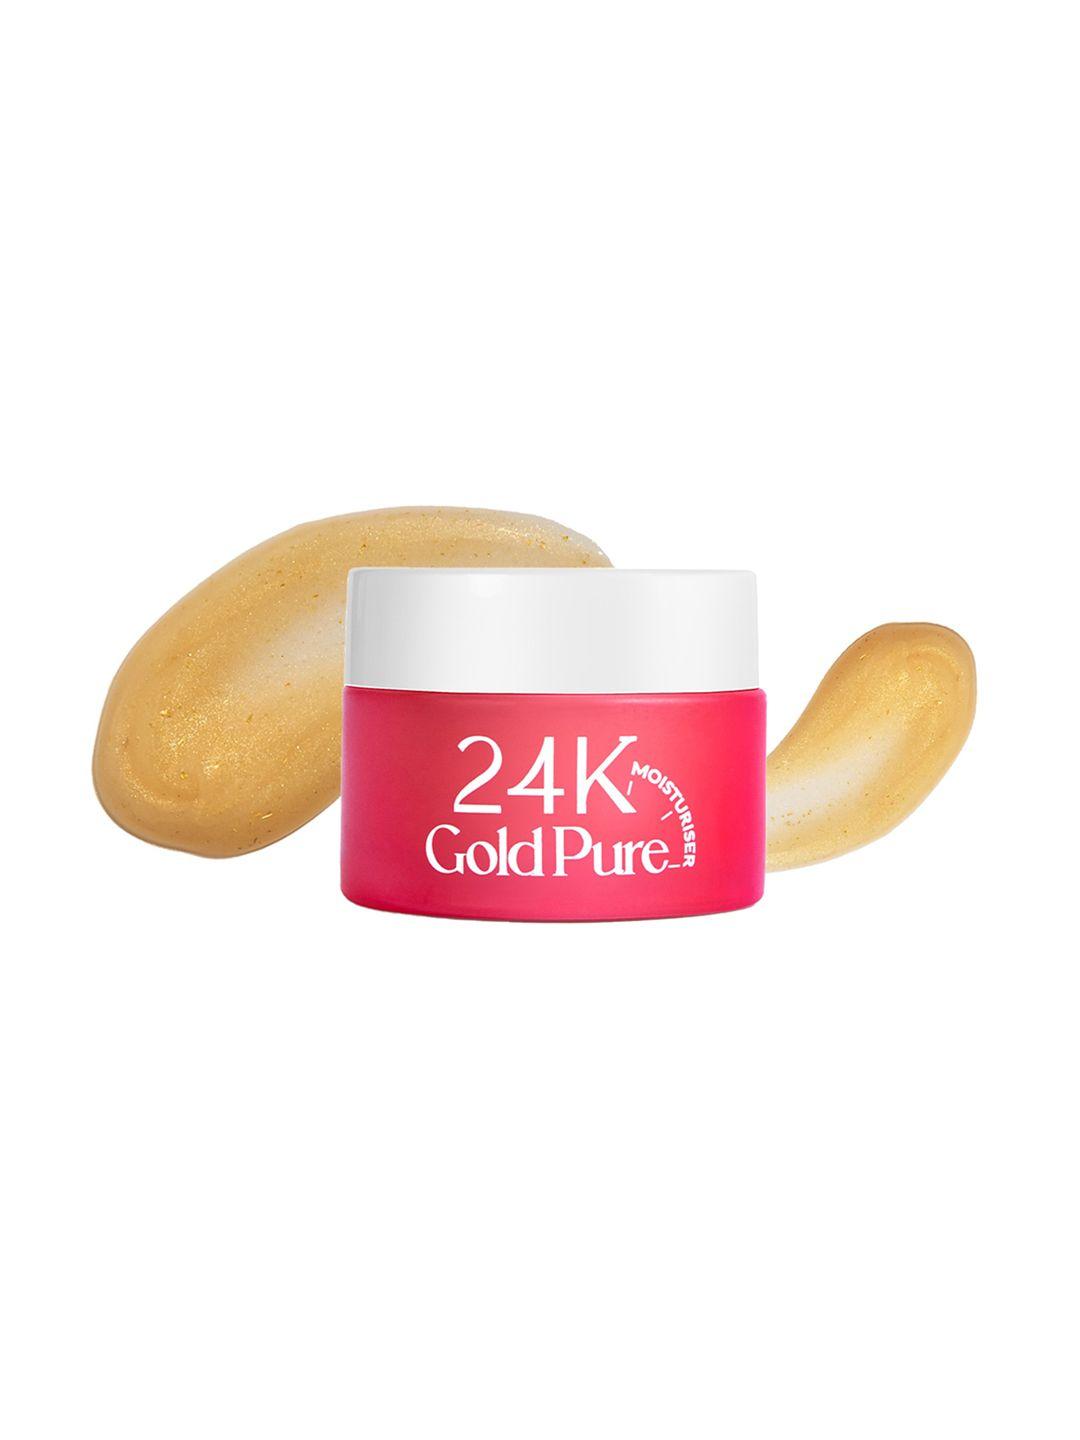 wildglow 24k gold pure face moisturiser with vitamin e & aloevera - 50 g